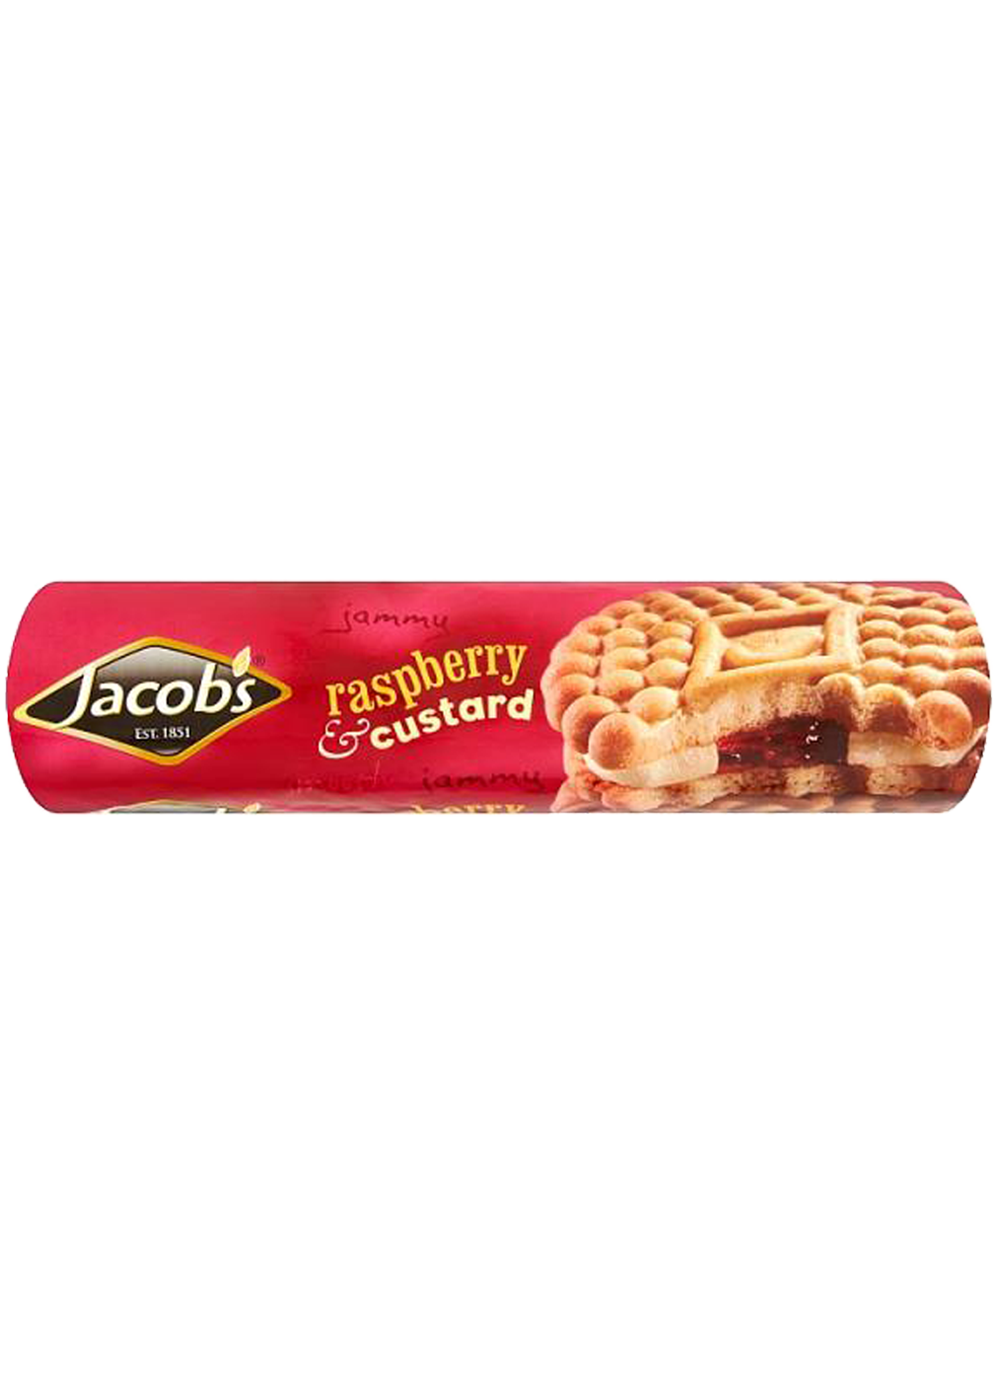 Jacob's Raspberry & Custard smooth jammy 200g